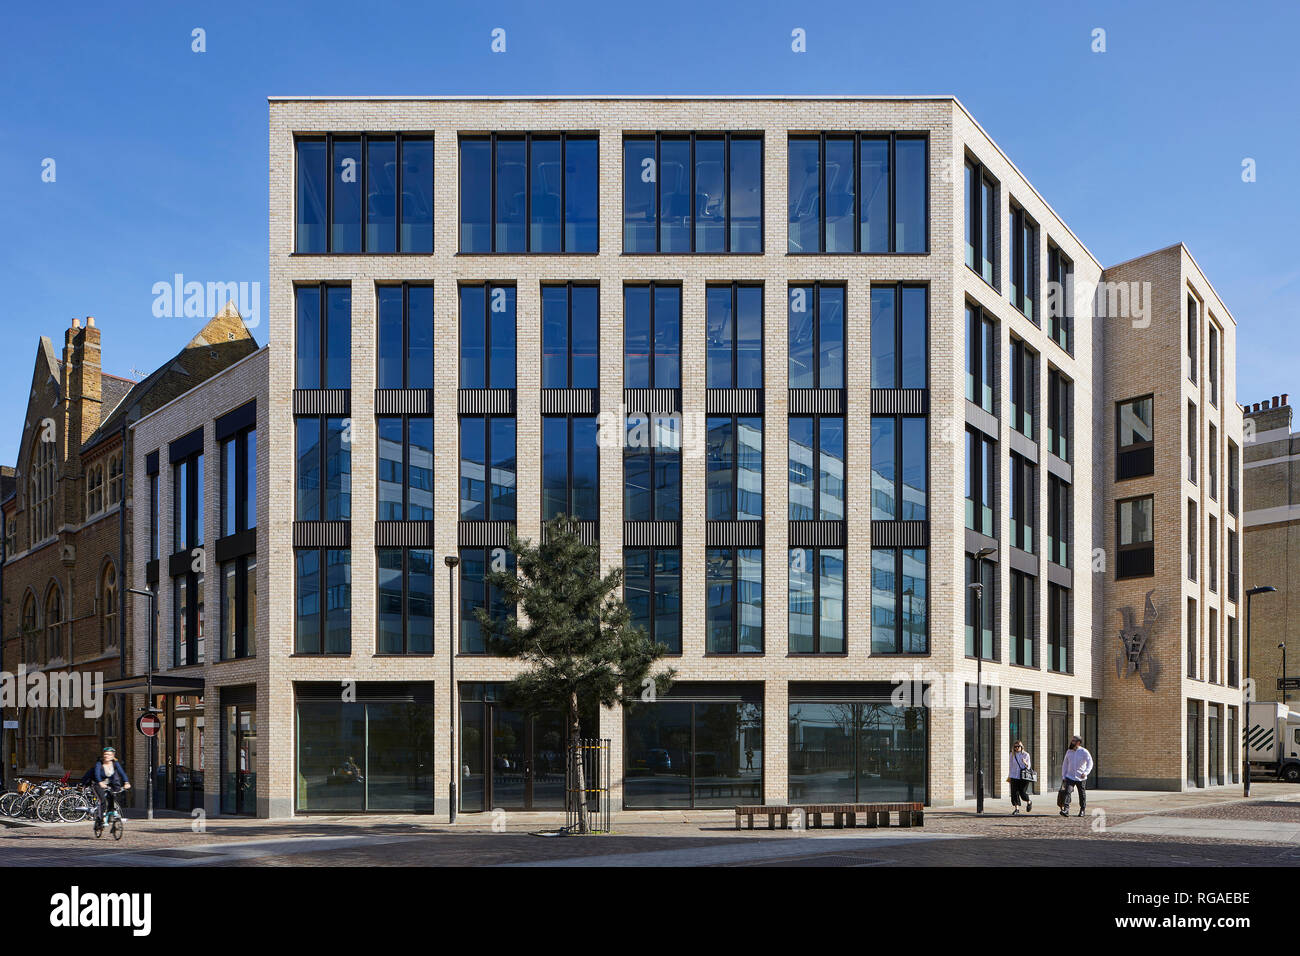 Front elevation. Paul Street, London, United Kingdom. Architect: Stiff + Trevillion Architects, 2018. Stock Photo